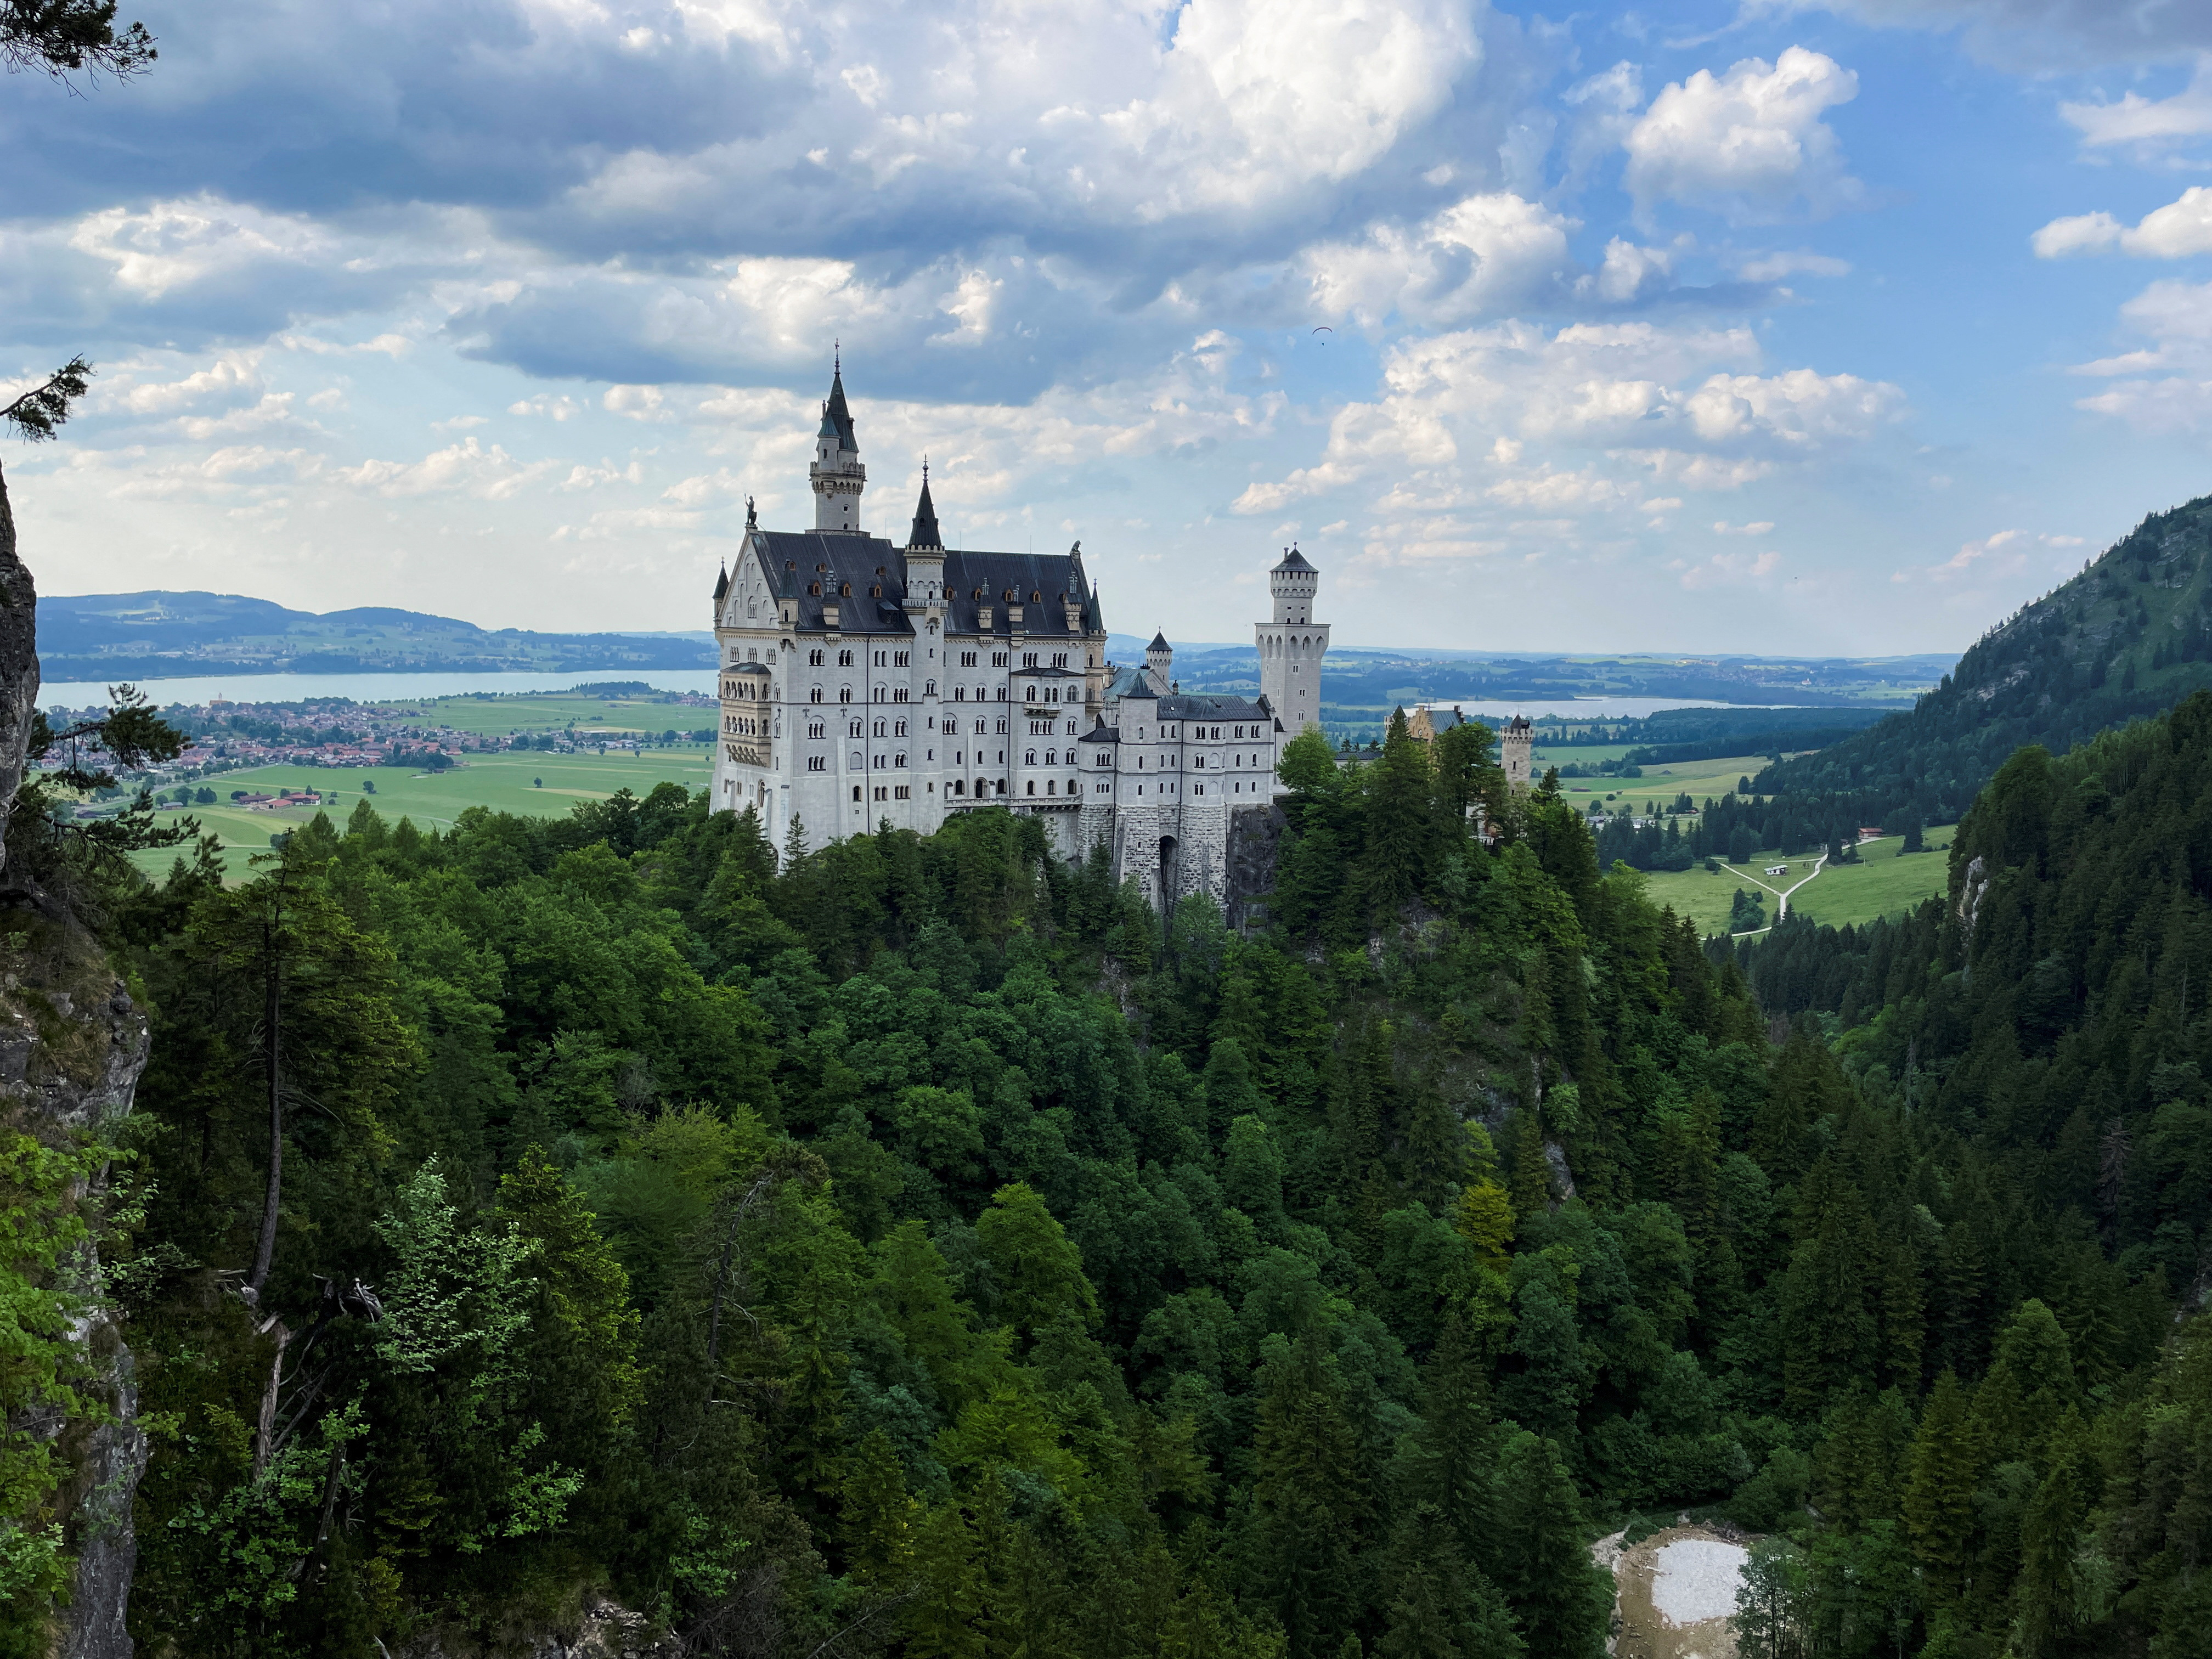 Tourist dies after attack near Germany's Neuschwanstein Castle, German police say